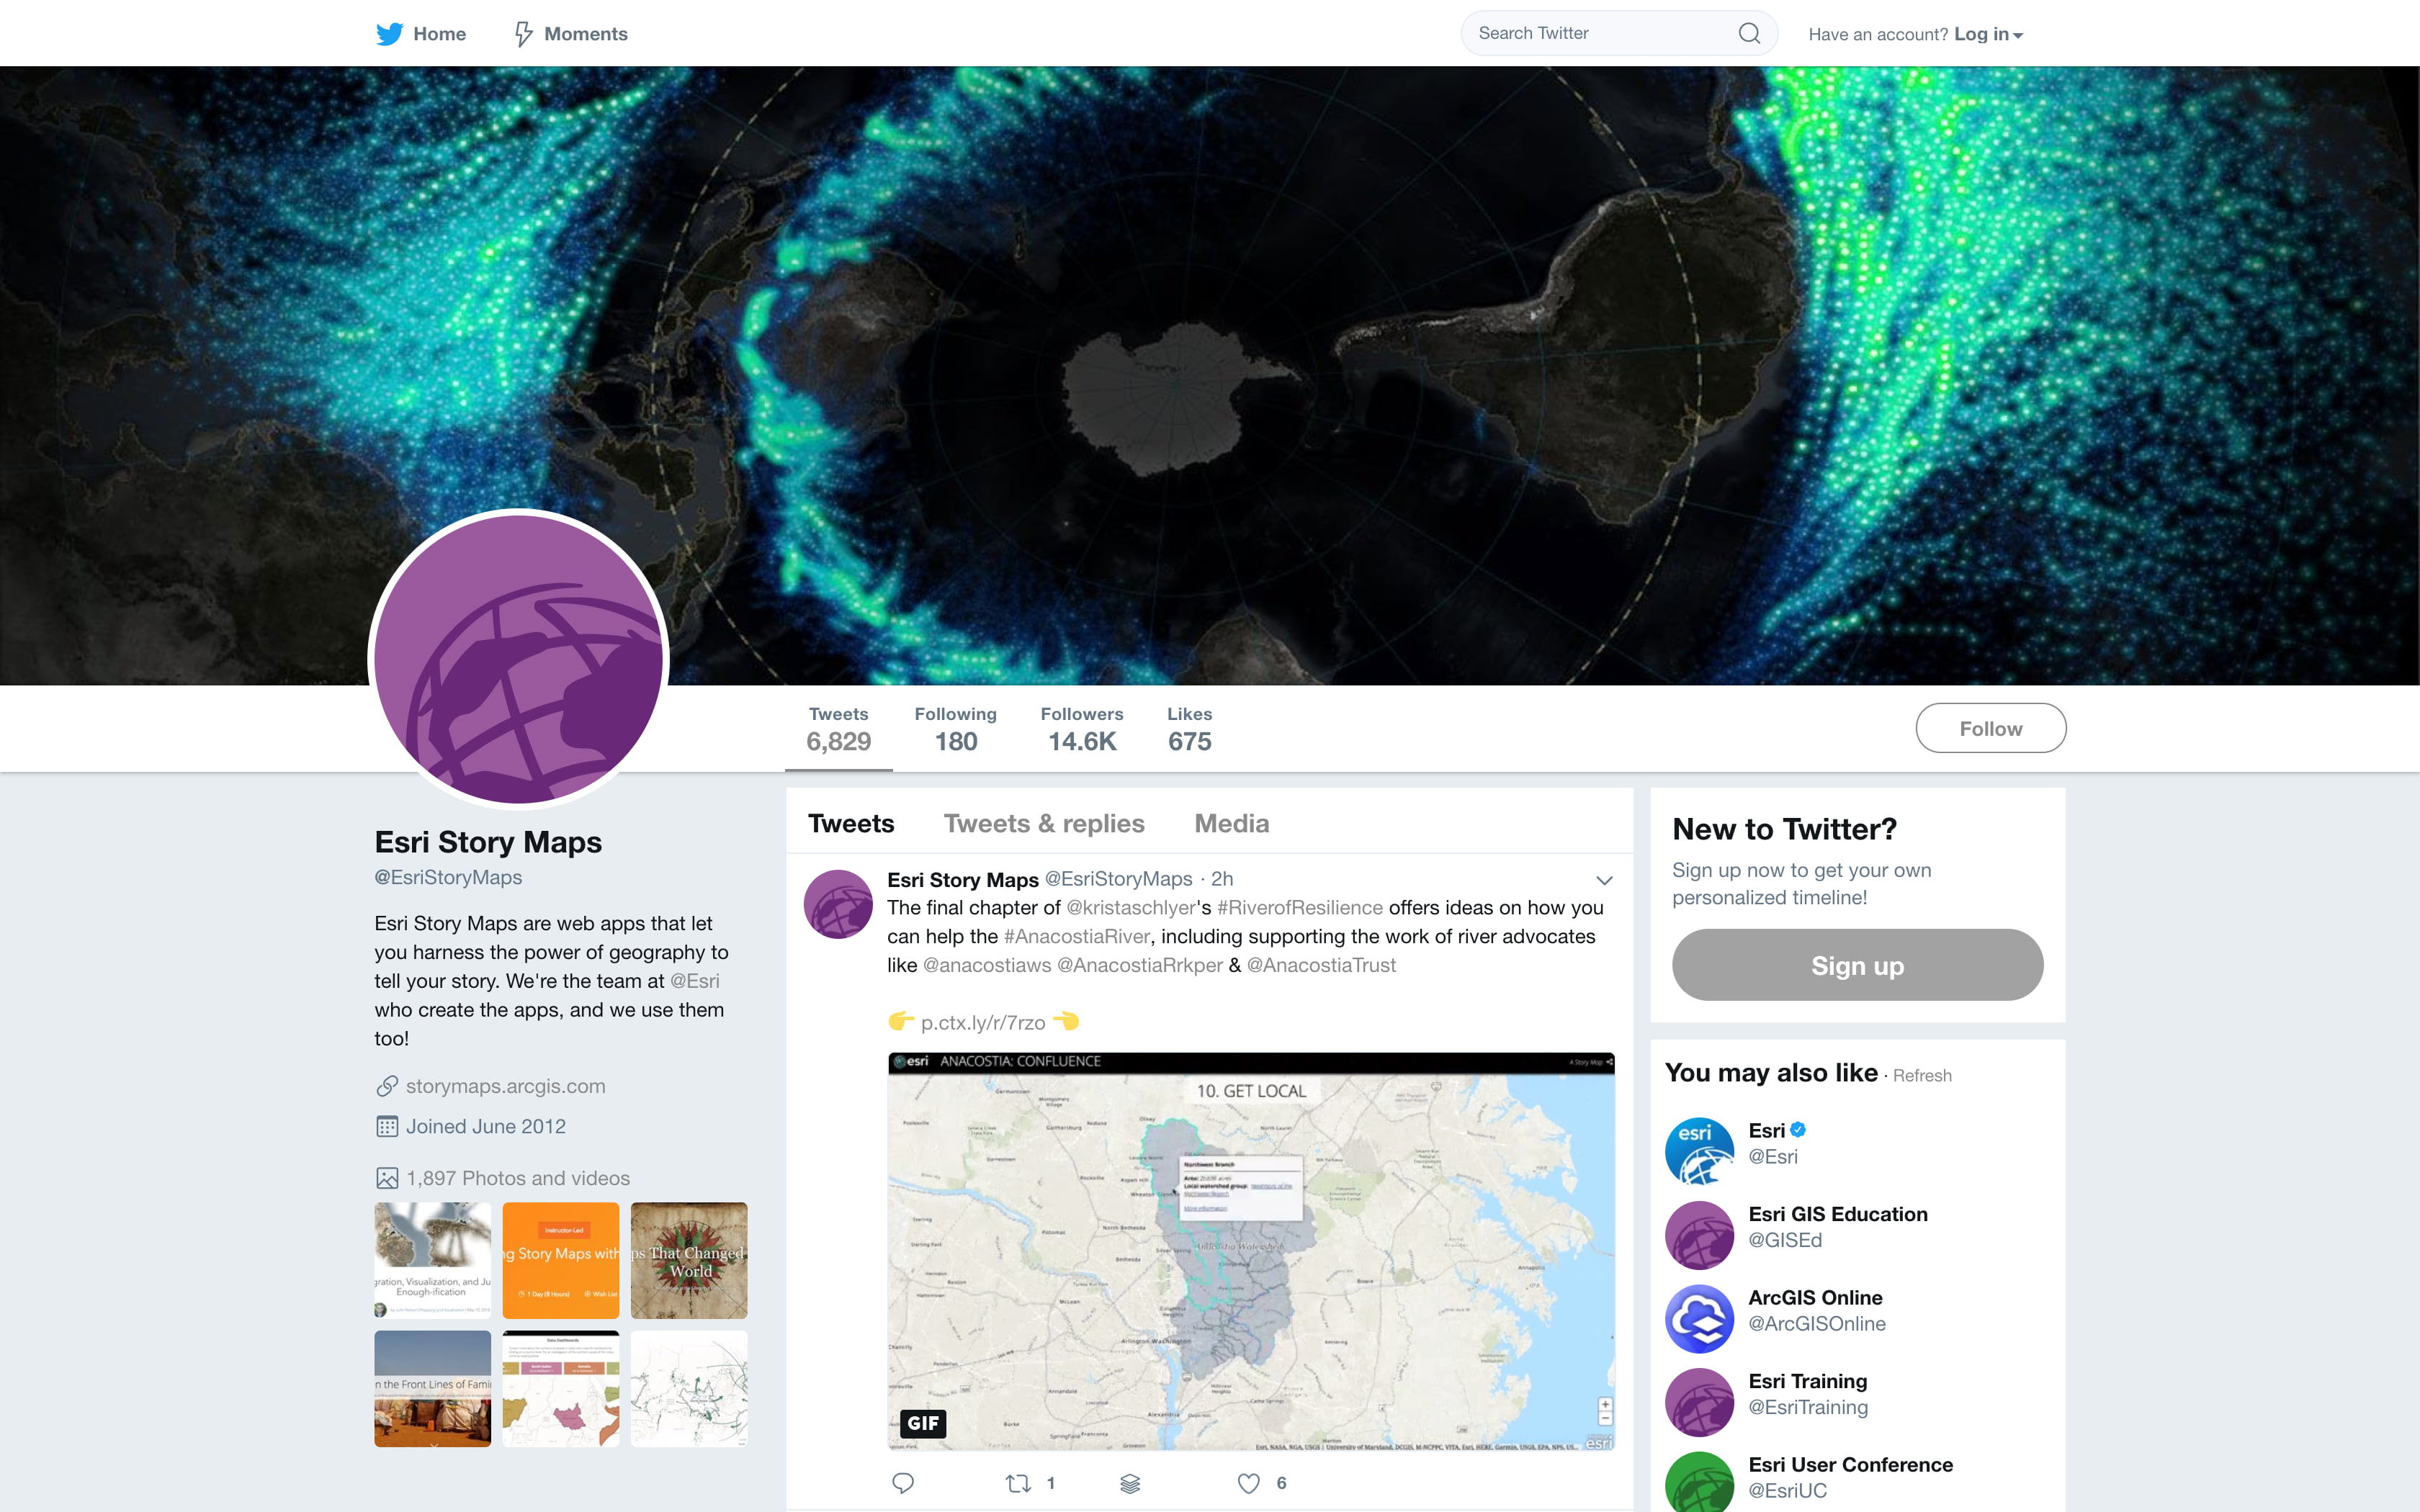 The Esri Story Maps Twitter feed